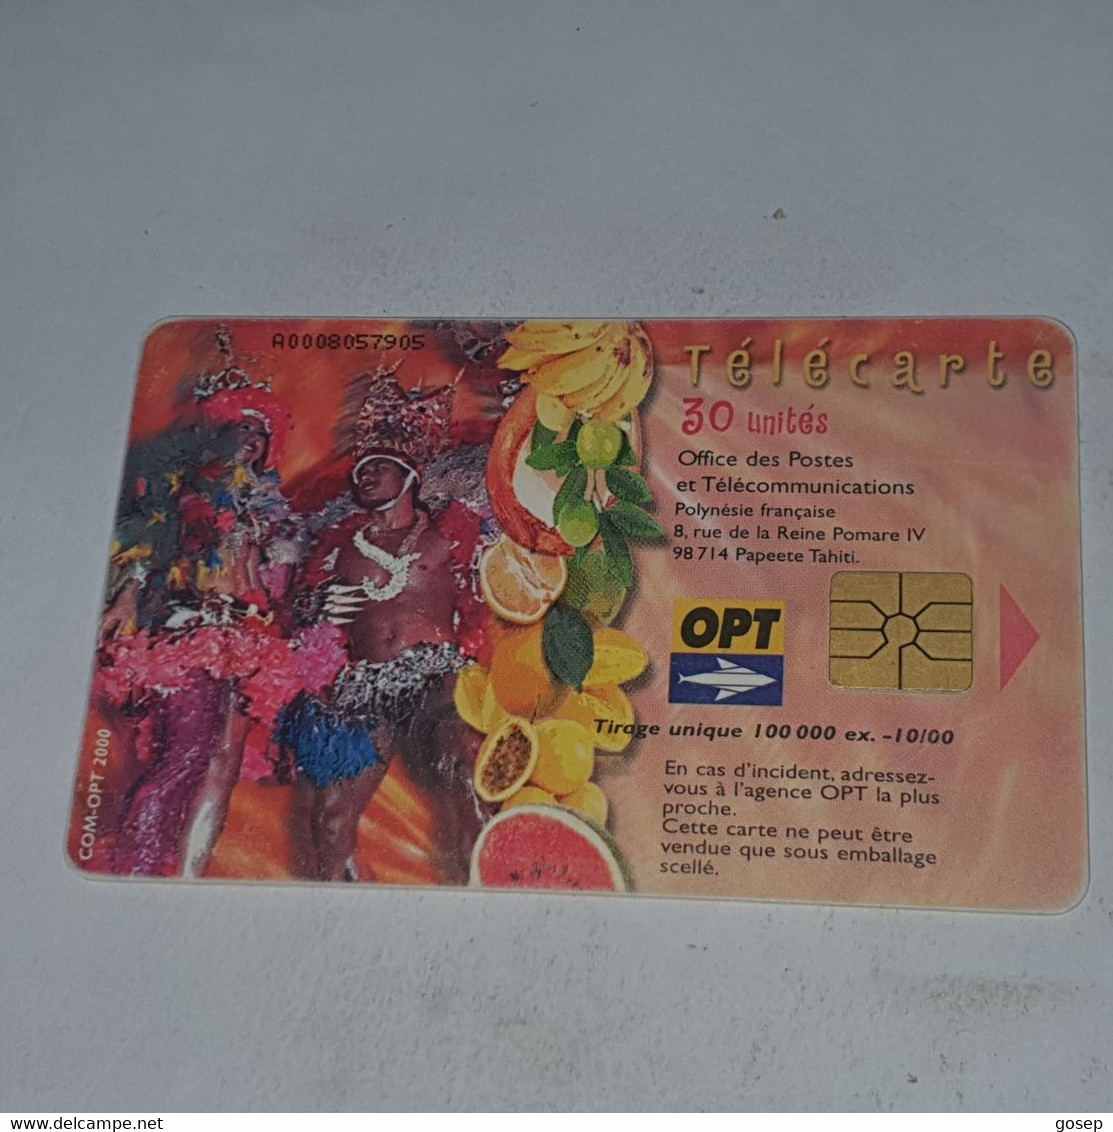 French Polynesia-(FP104)-carnaval De Tahiti-(14)-(A0008057905)-(30units)-(tirage-100.000)-used Card+1card Prepiad Free - Polynésie Française